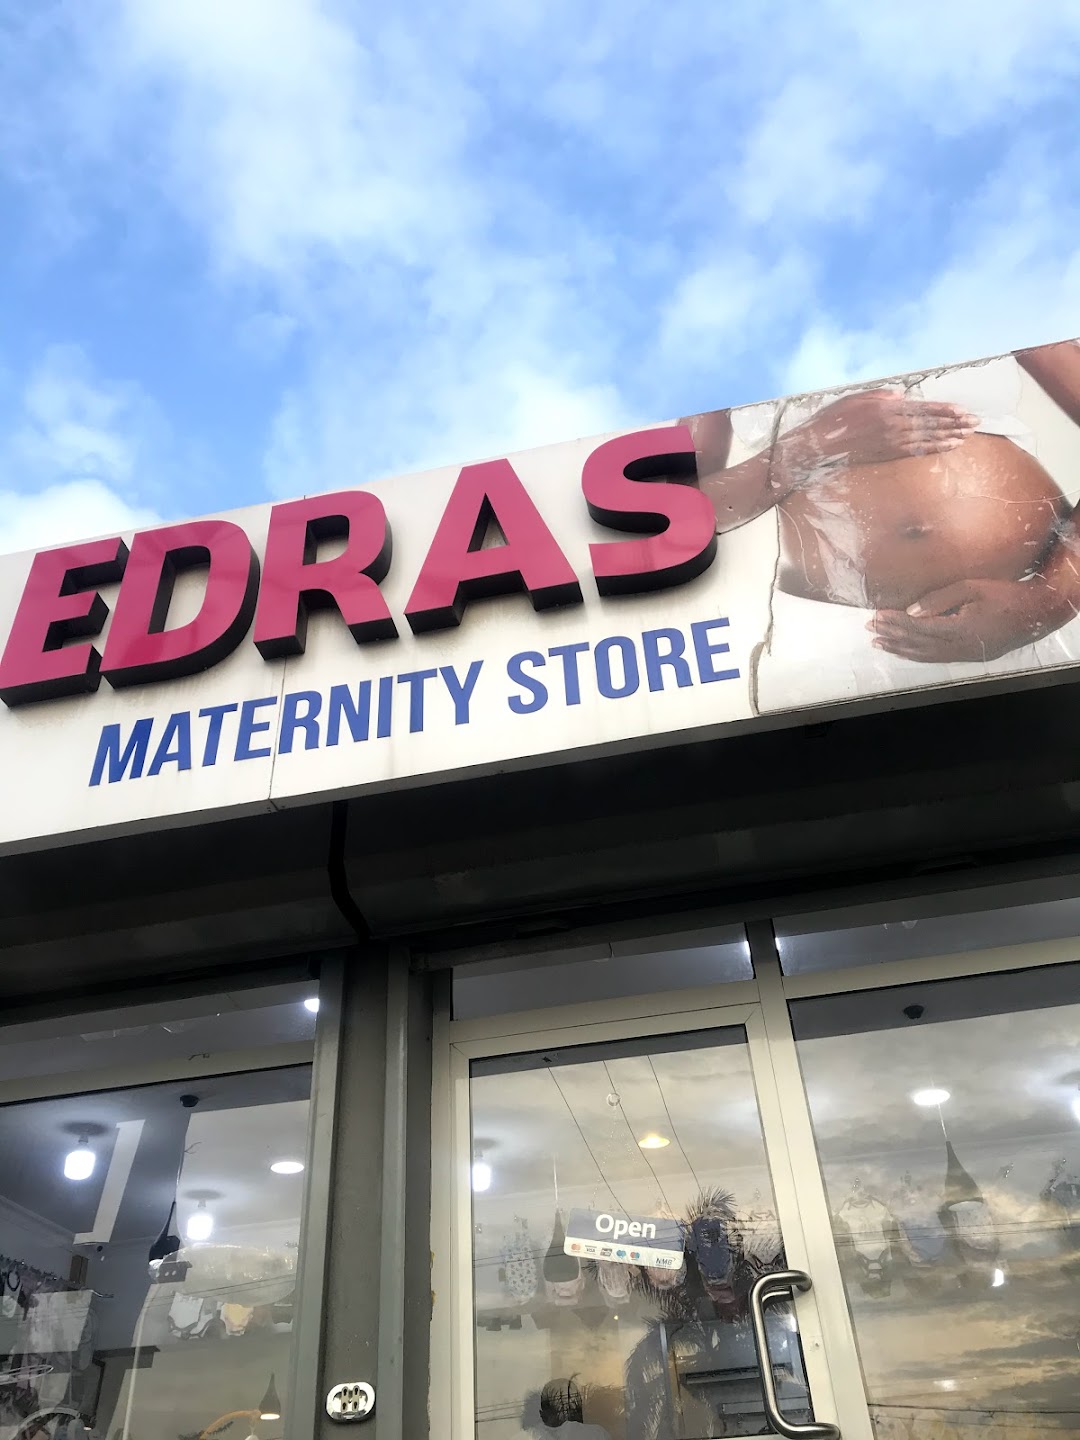 The Edras - Maternity Store